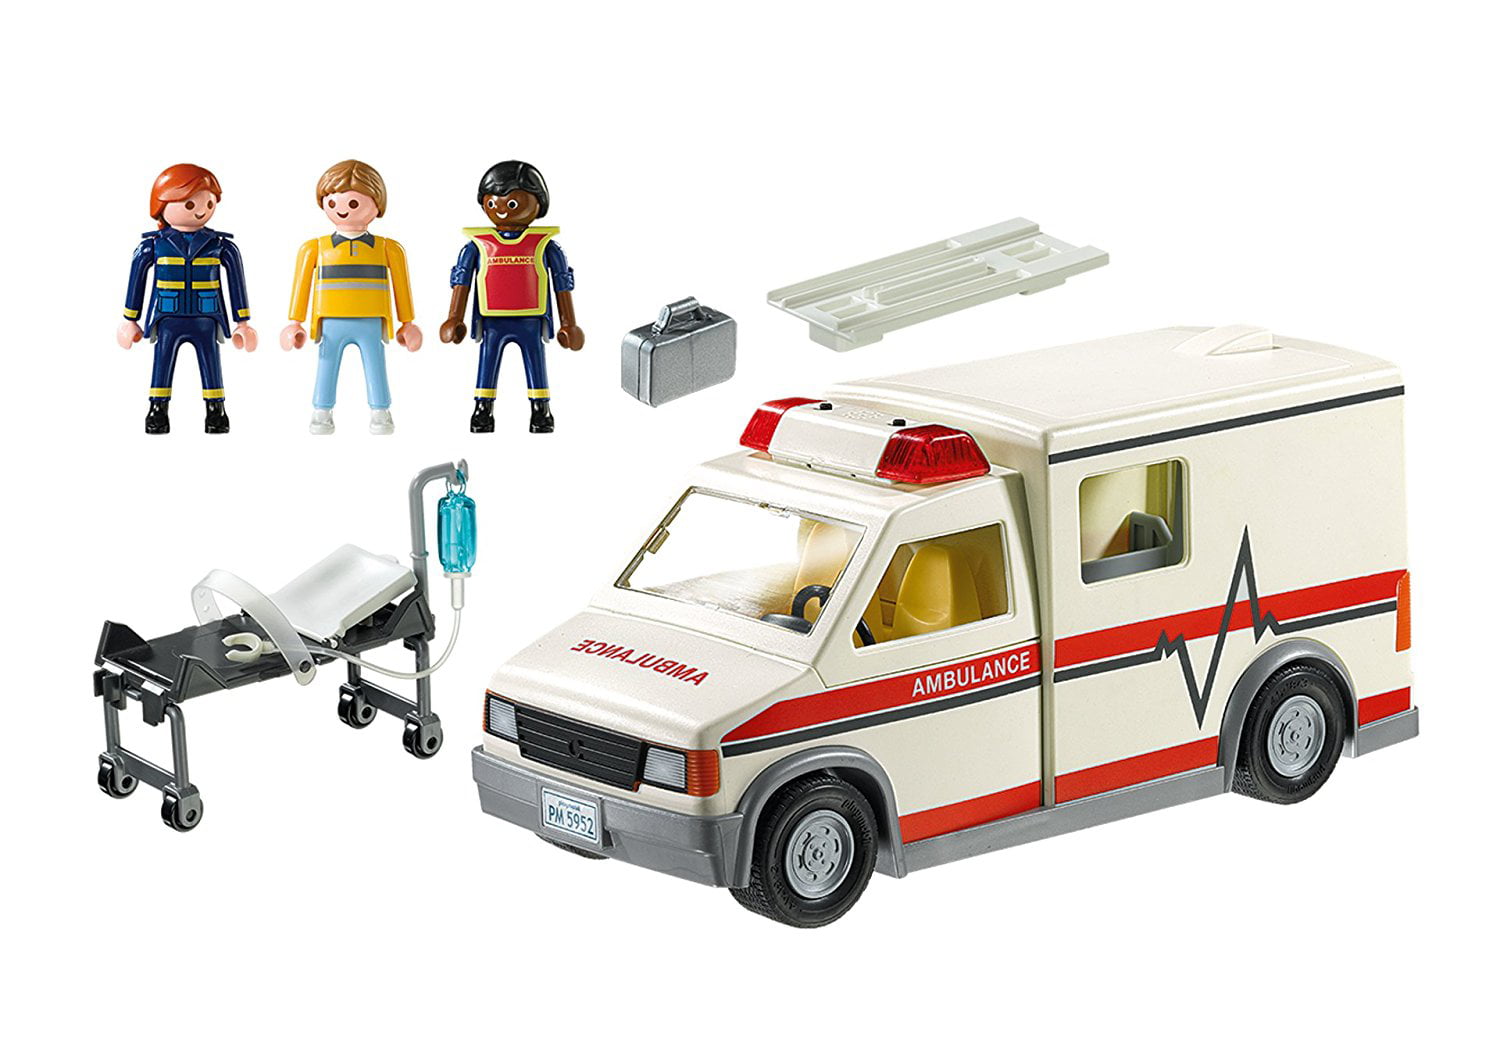 Playmobil Rescue Ambulance and Take Along Fire Station 